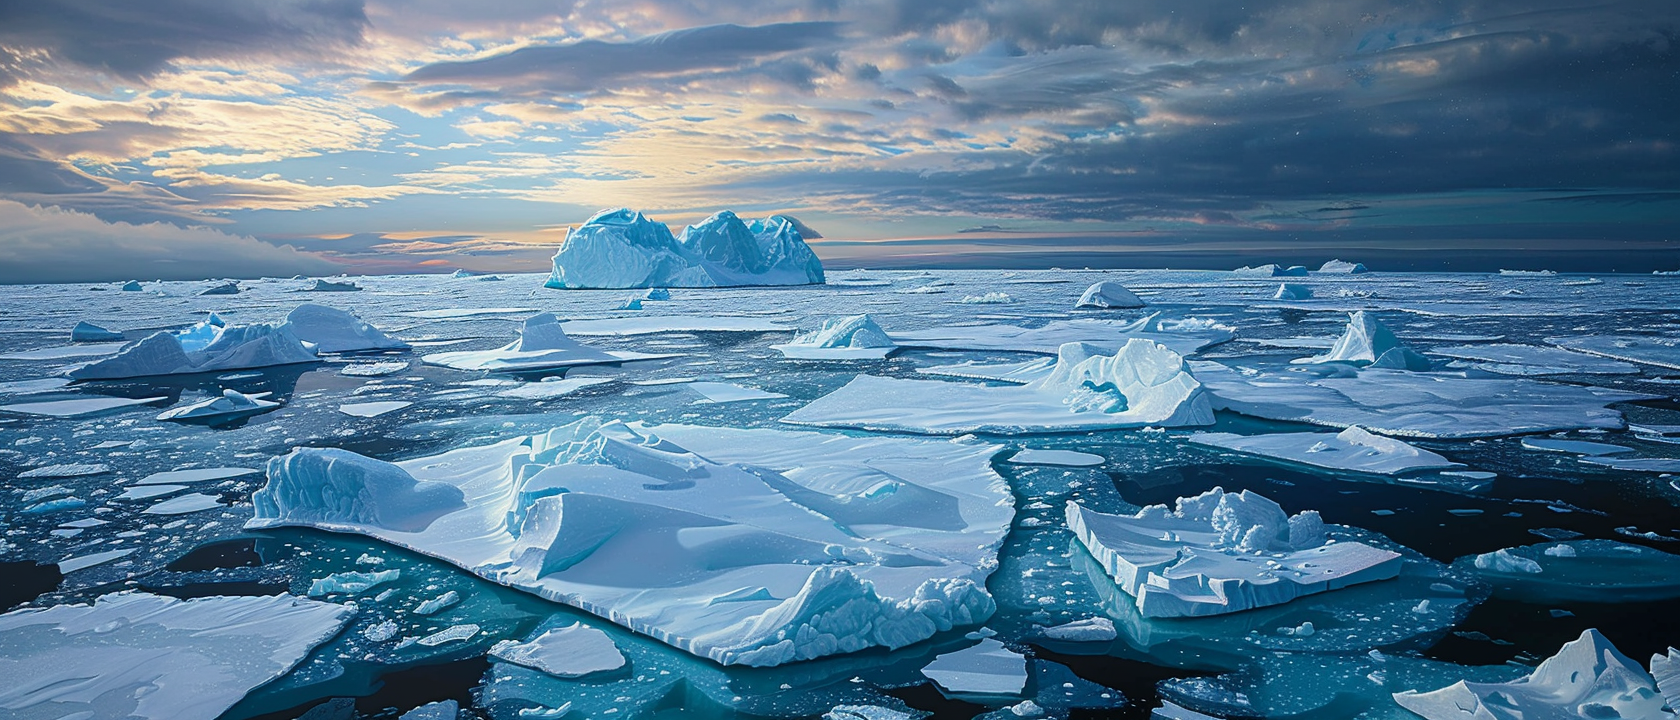 The Misleading Narrative of Vanishing Arctic Ice